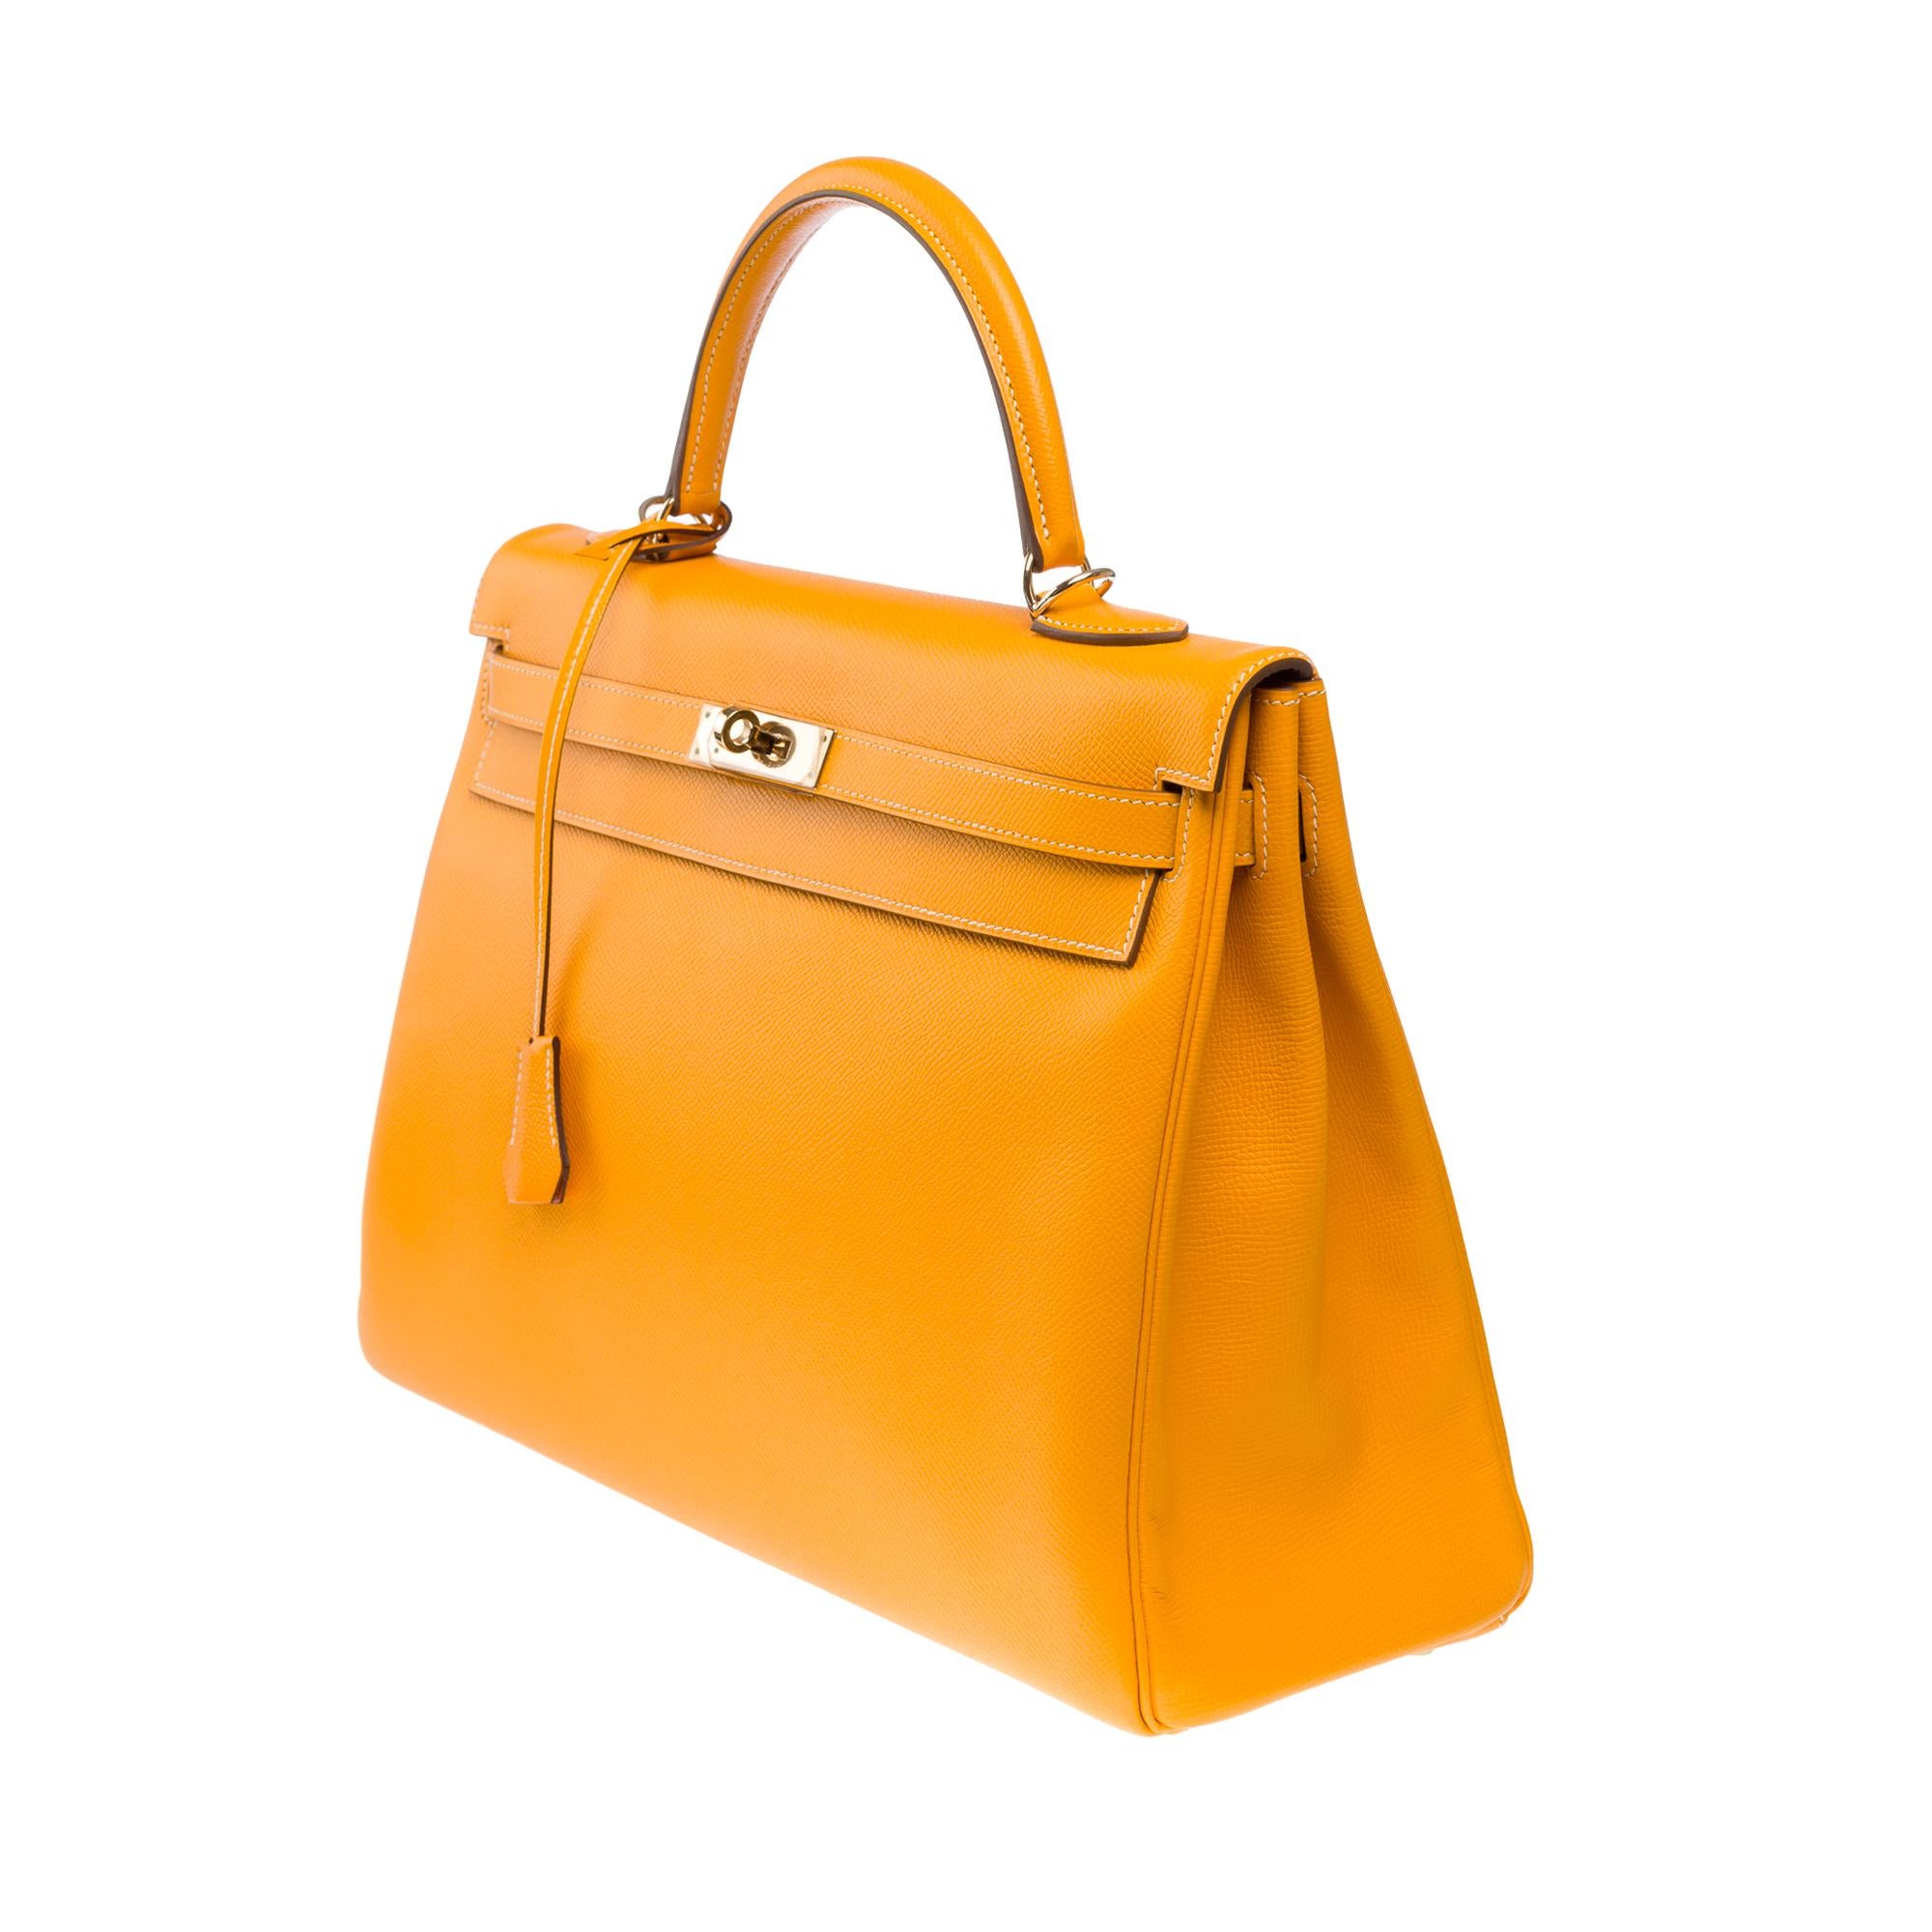 Candy Limited Edition Hermès Kelly 35 handbag strap in Yellow Epsom leather, GHW 1